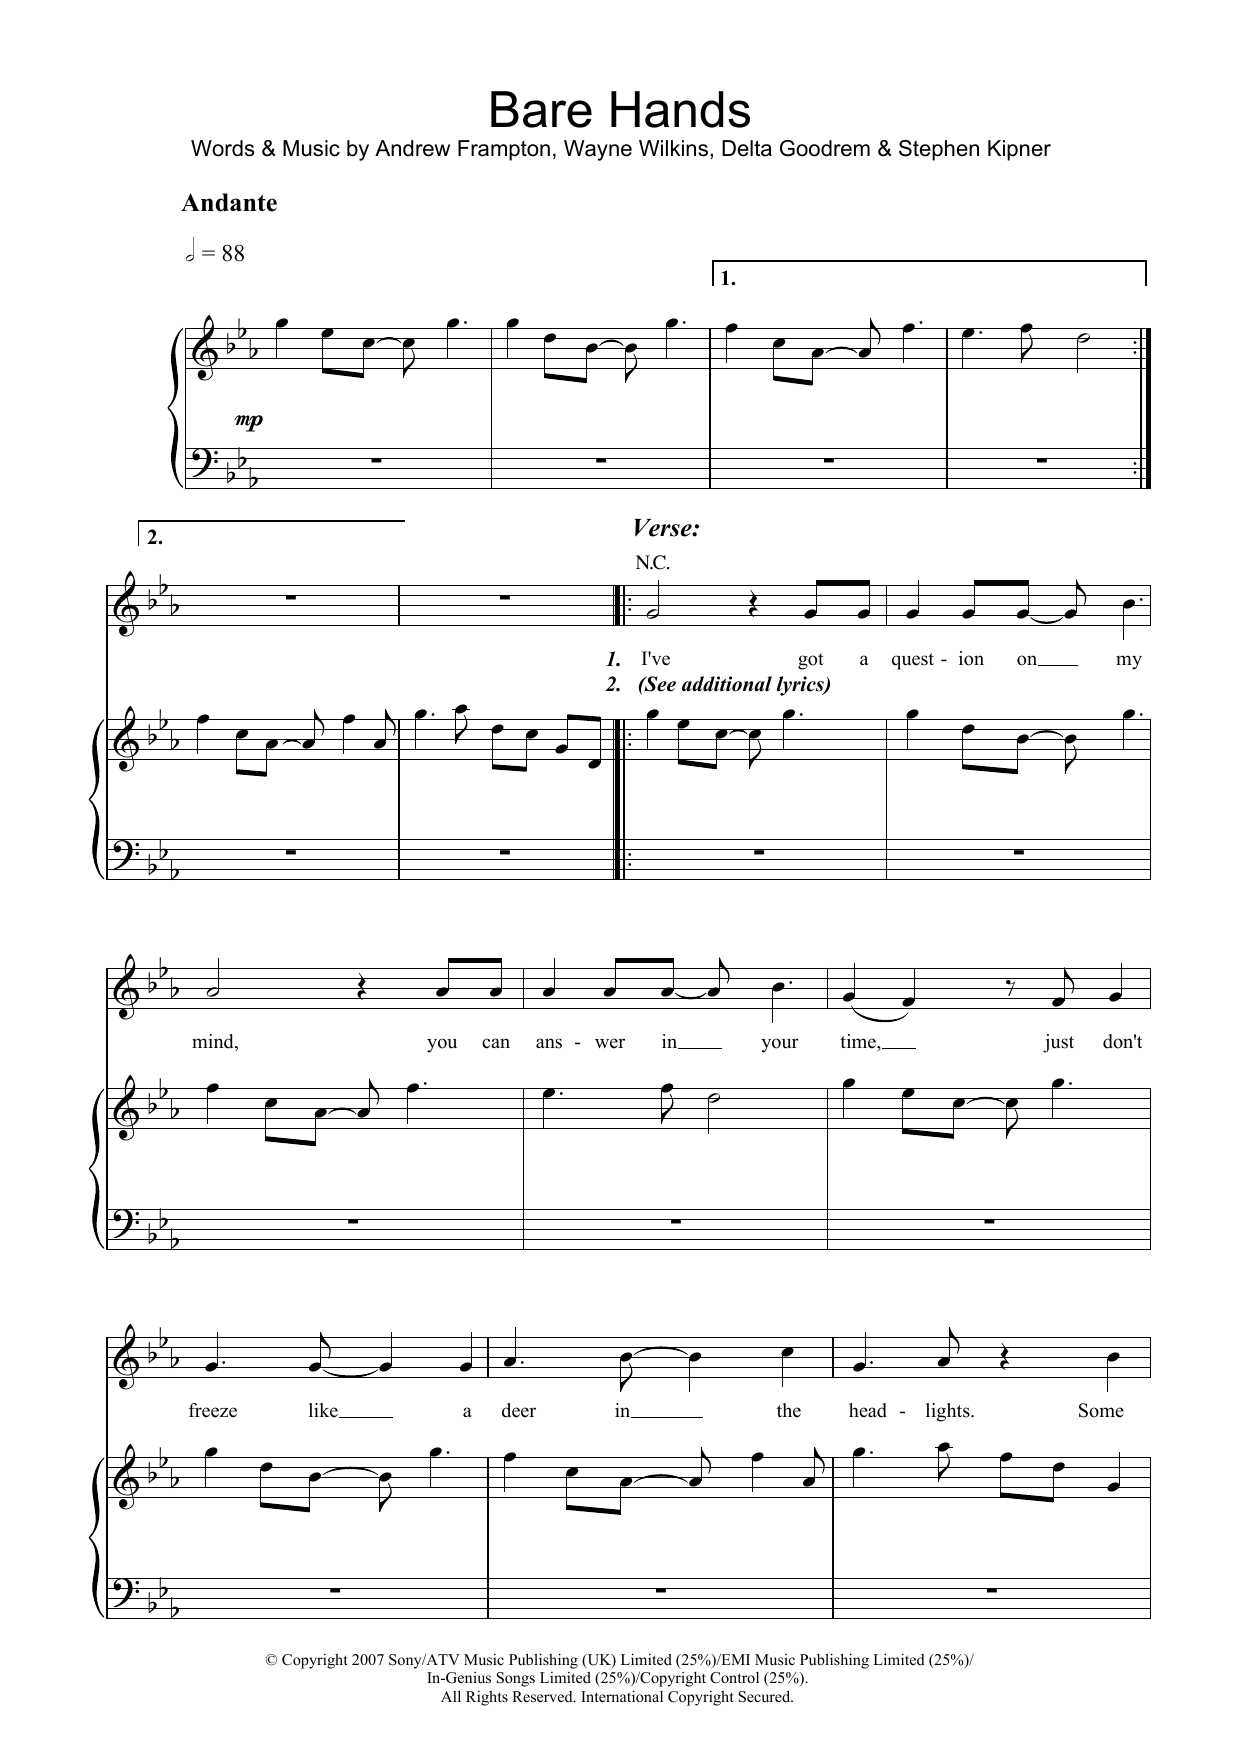 Delta Goodrem Bare Hands Sheet Music Notes & Chords for Piano, Vocal & Guitar - Download or Print PDF